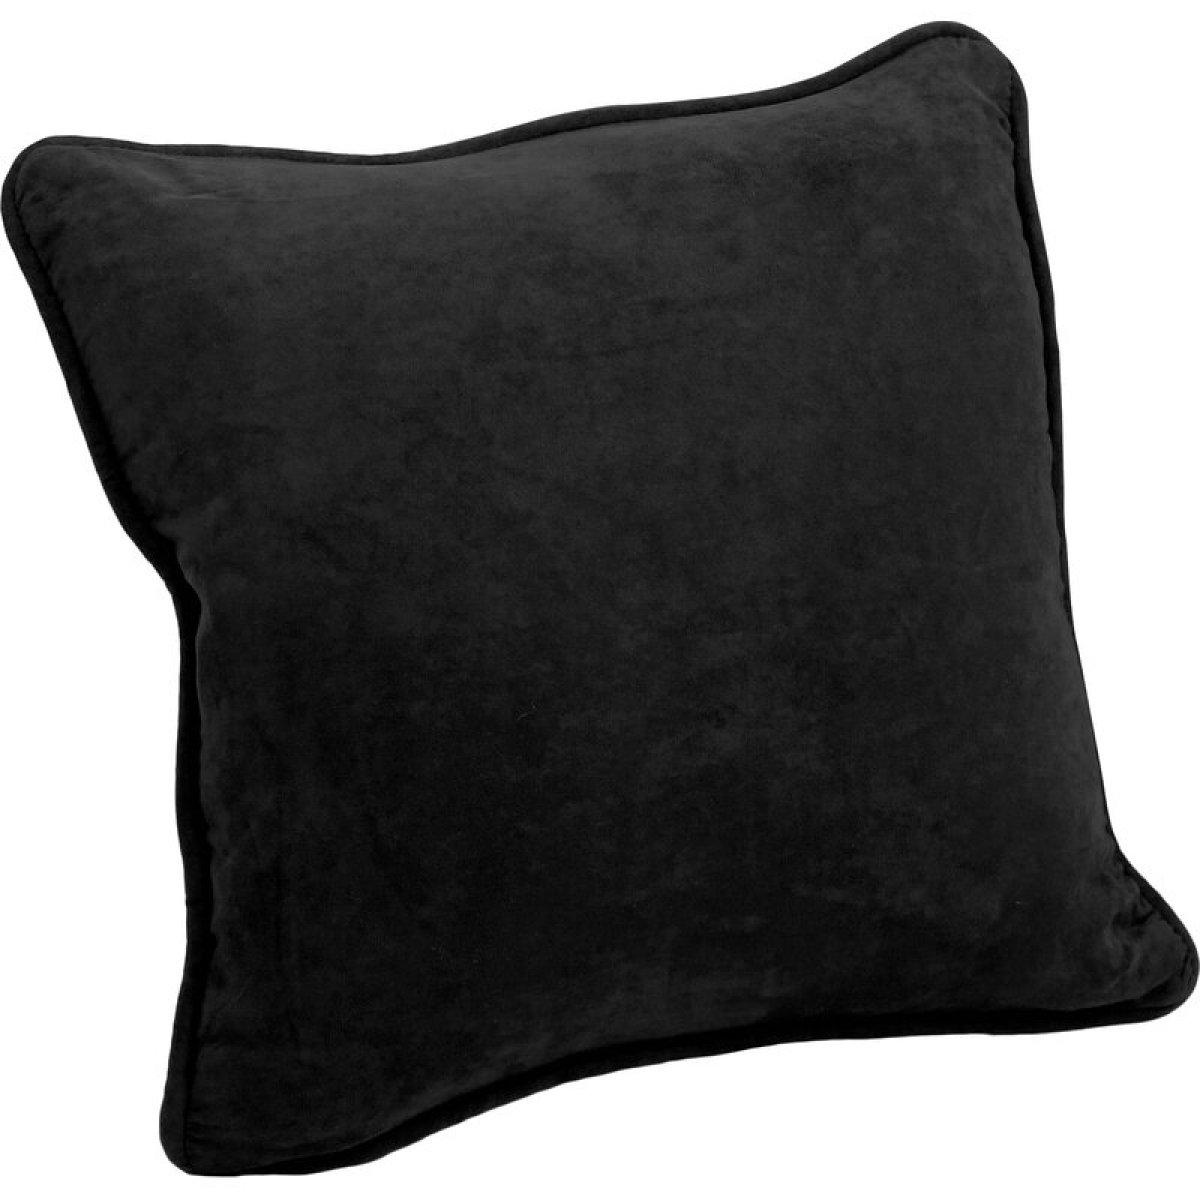 The Mercer41 Ariaunna Corded Throw Pillow 